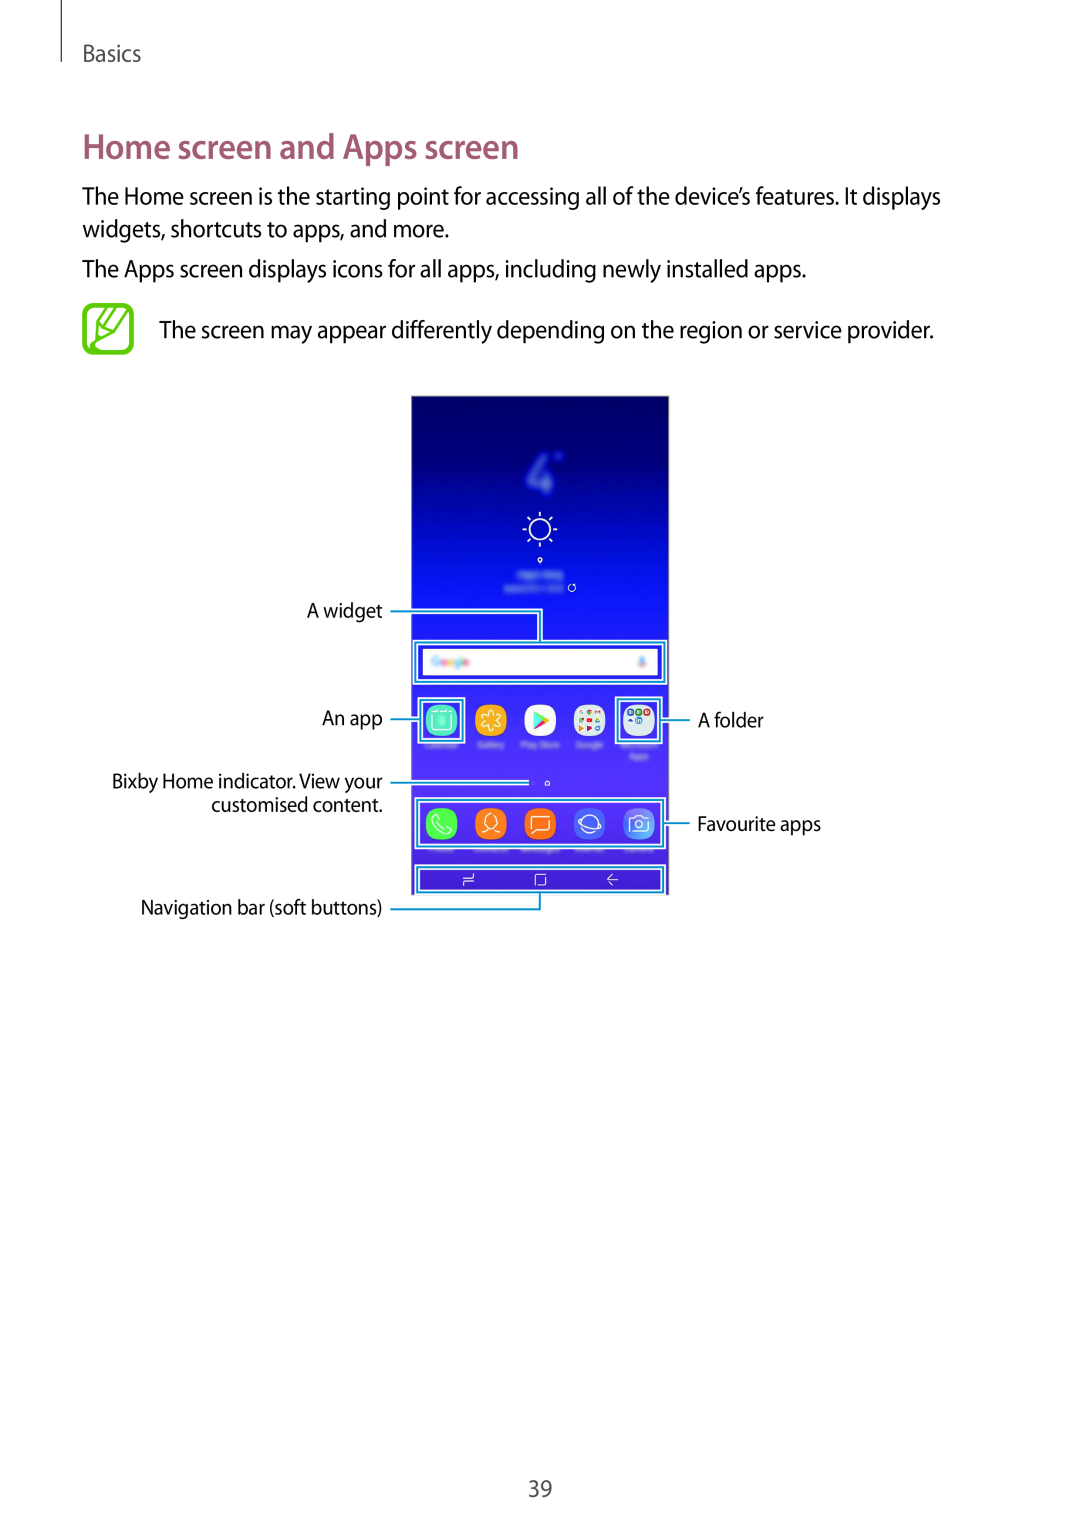 Samsung SM-A530FZKDCOS manual Home screen and Apps screen, Basics, A widget, Navigation bar soft buttons, Favourite apps 